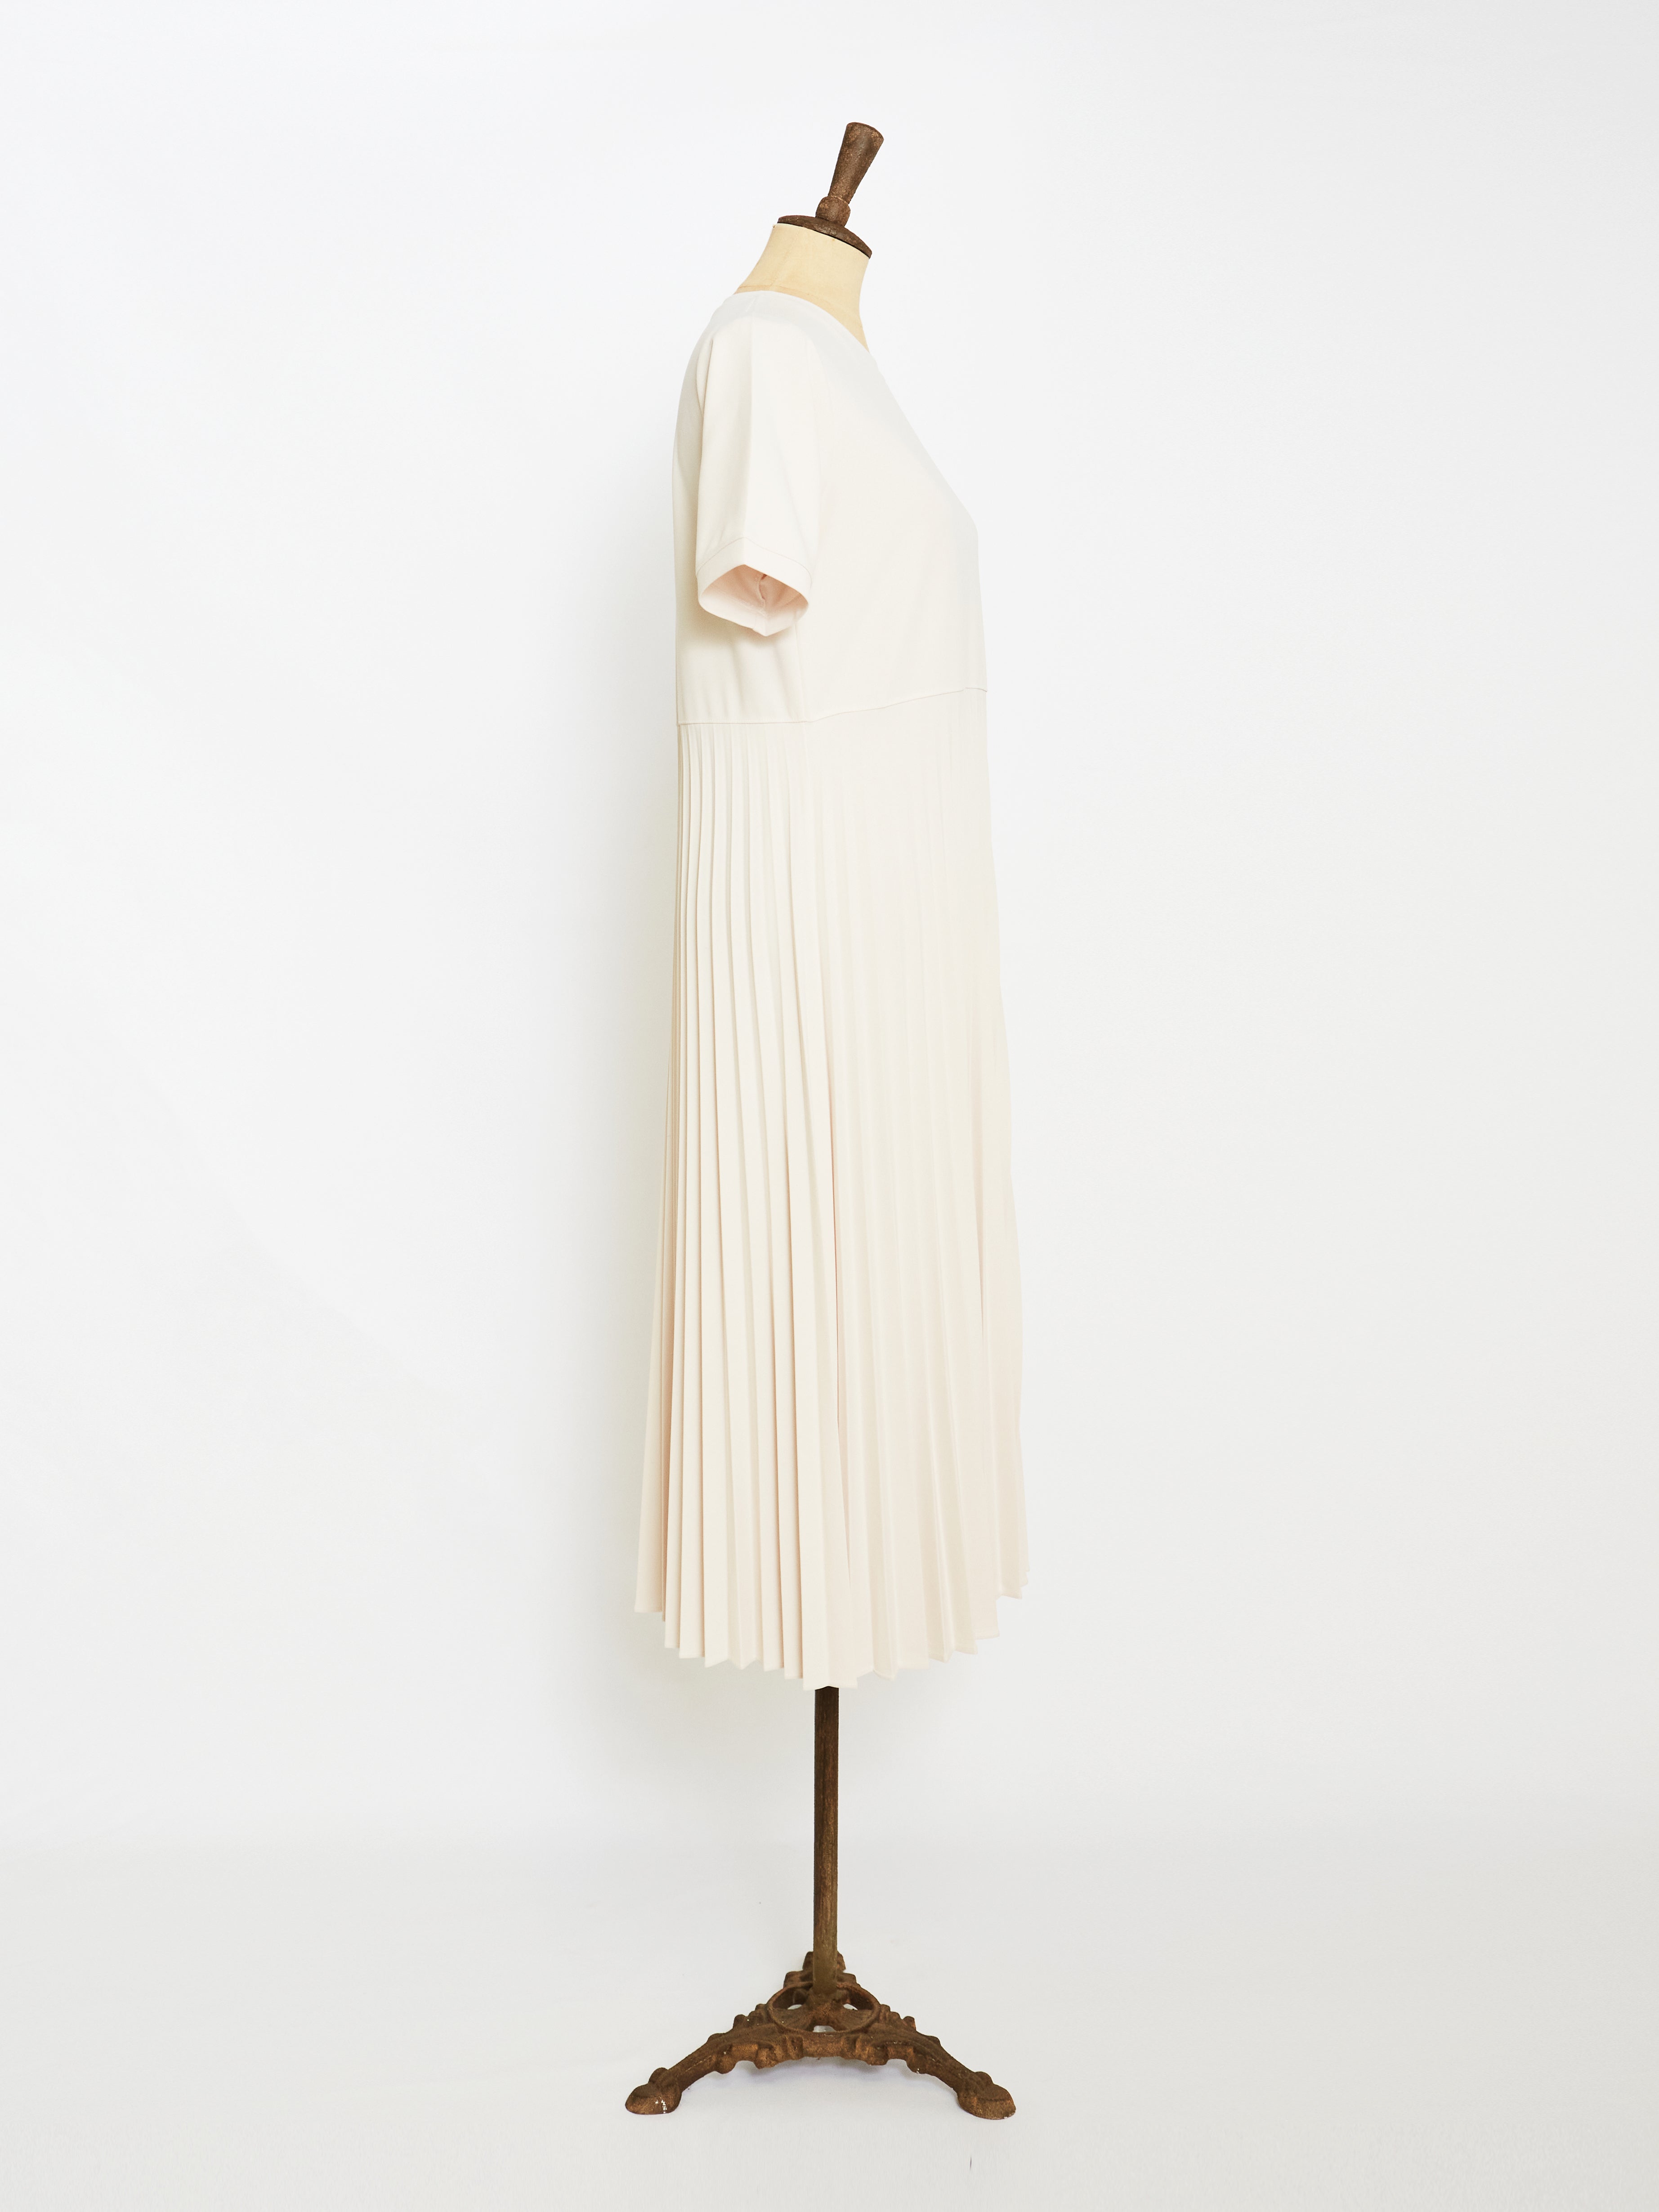 Span Long Dress (Ivory)